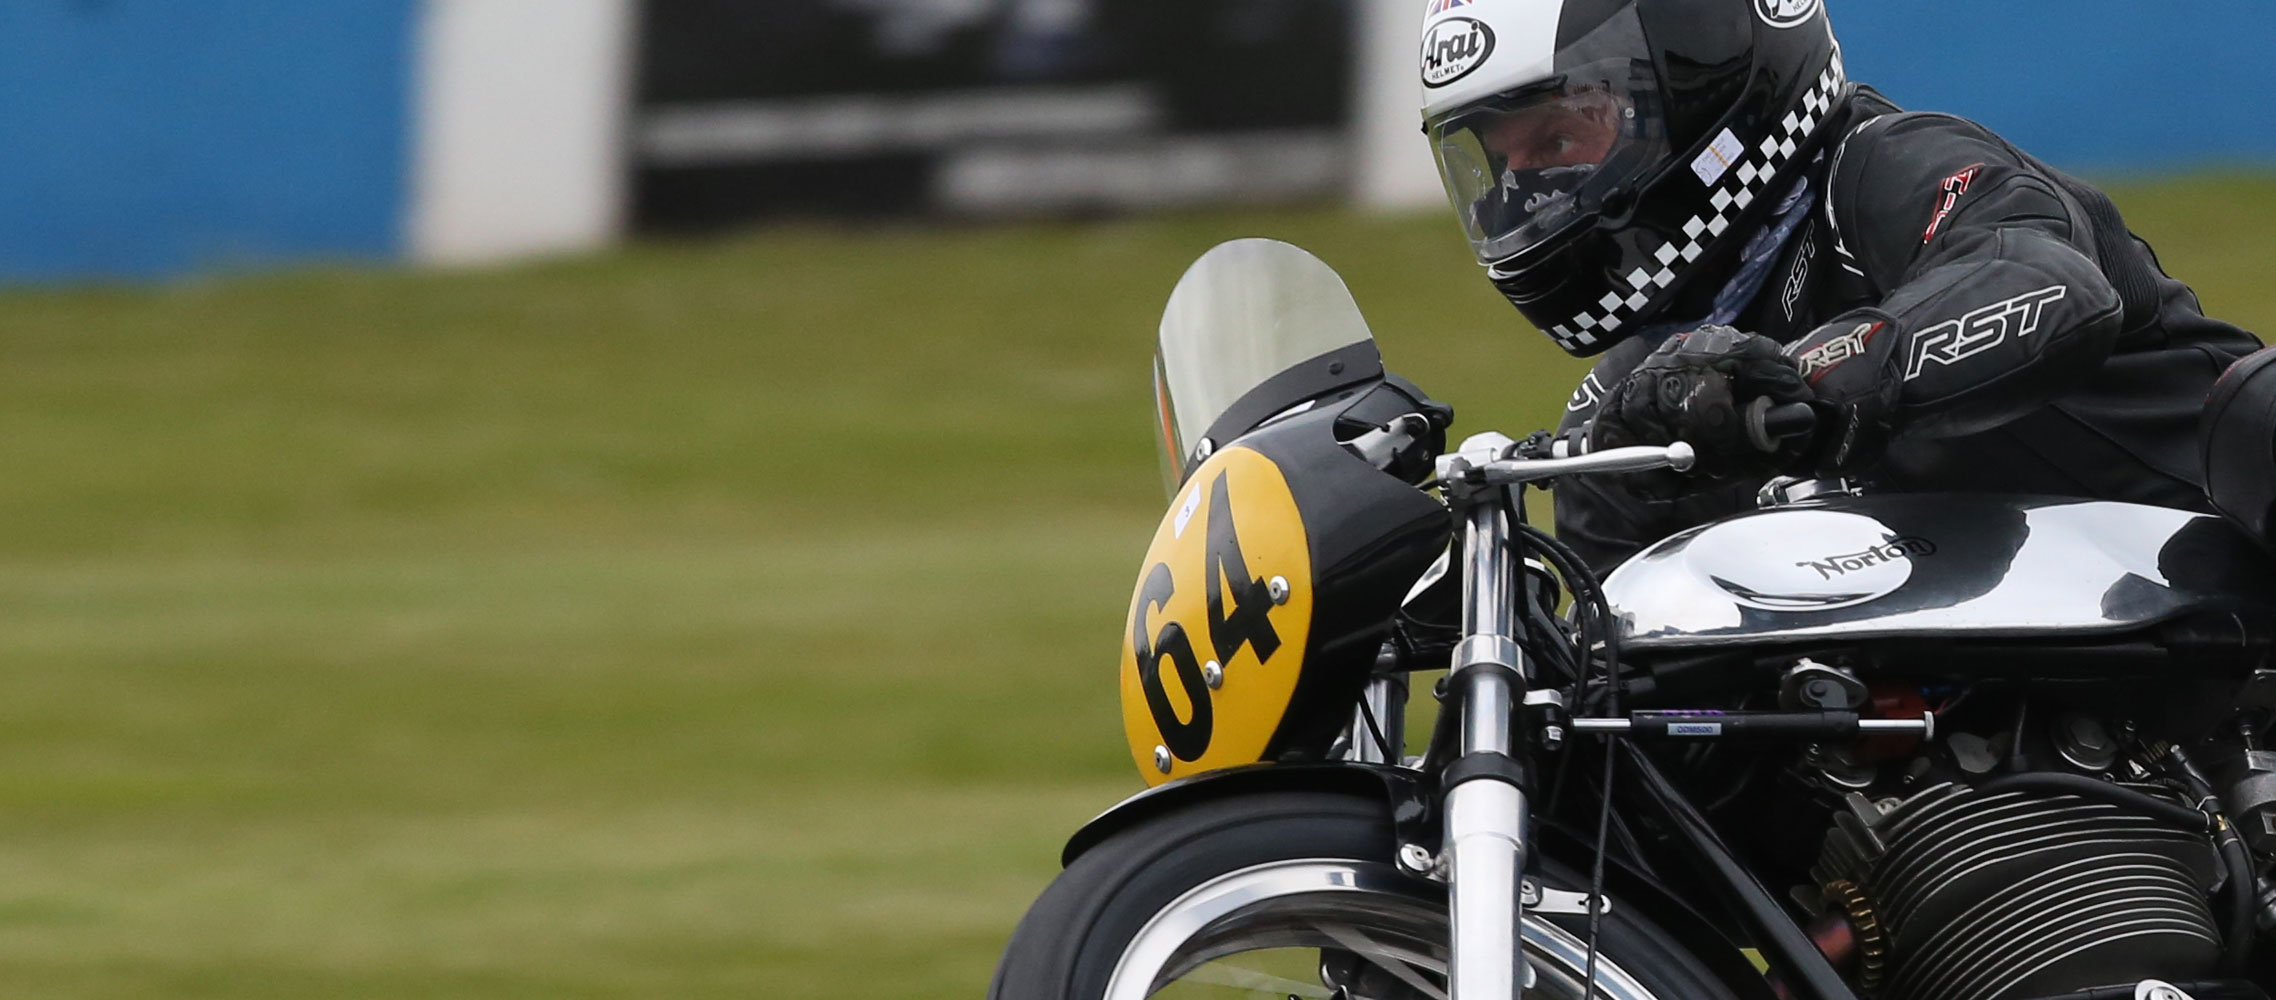 Chris Bassett racing his Manx Norton at the Lansdowne